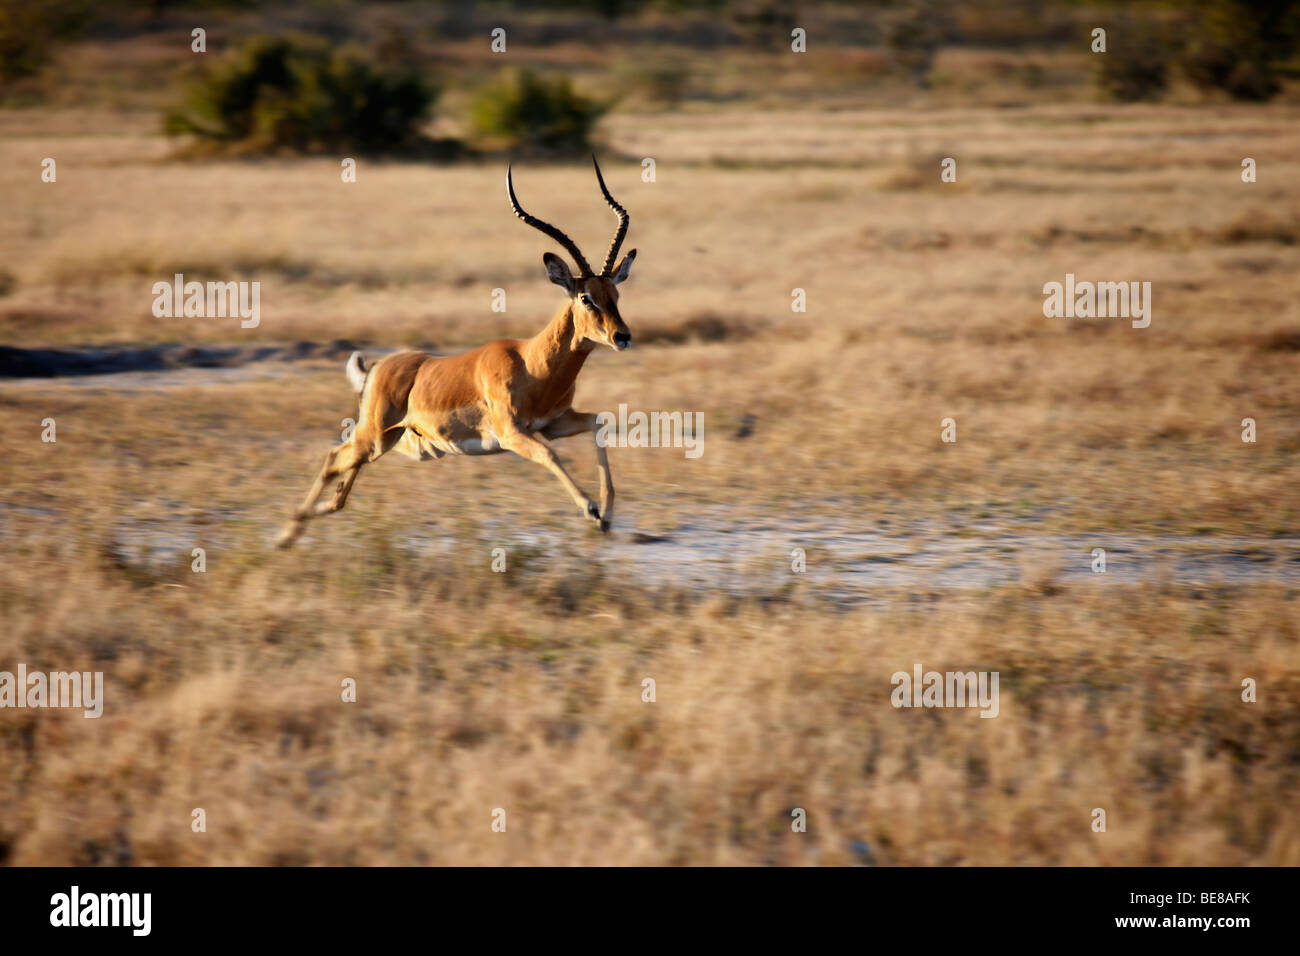 A male Impala (Aepyceros melampus melampus) running in the Savuti area of Botswana Stock Photo